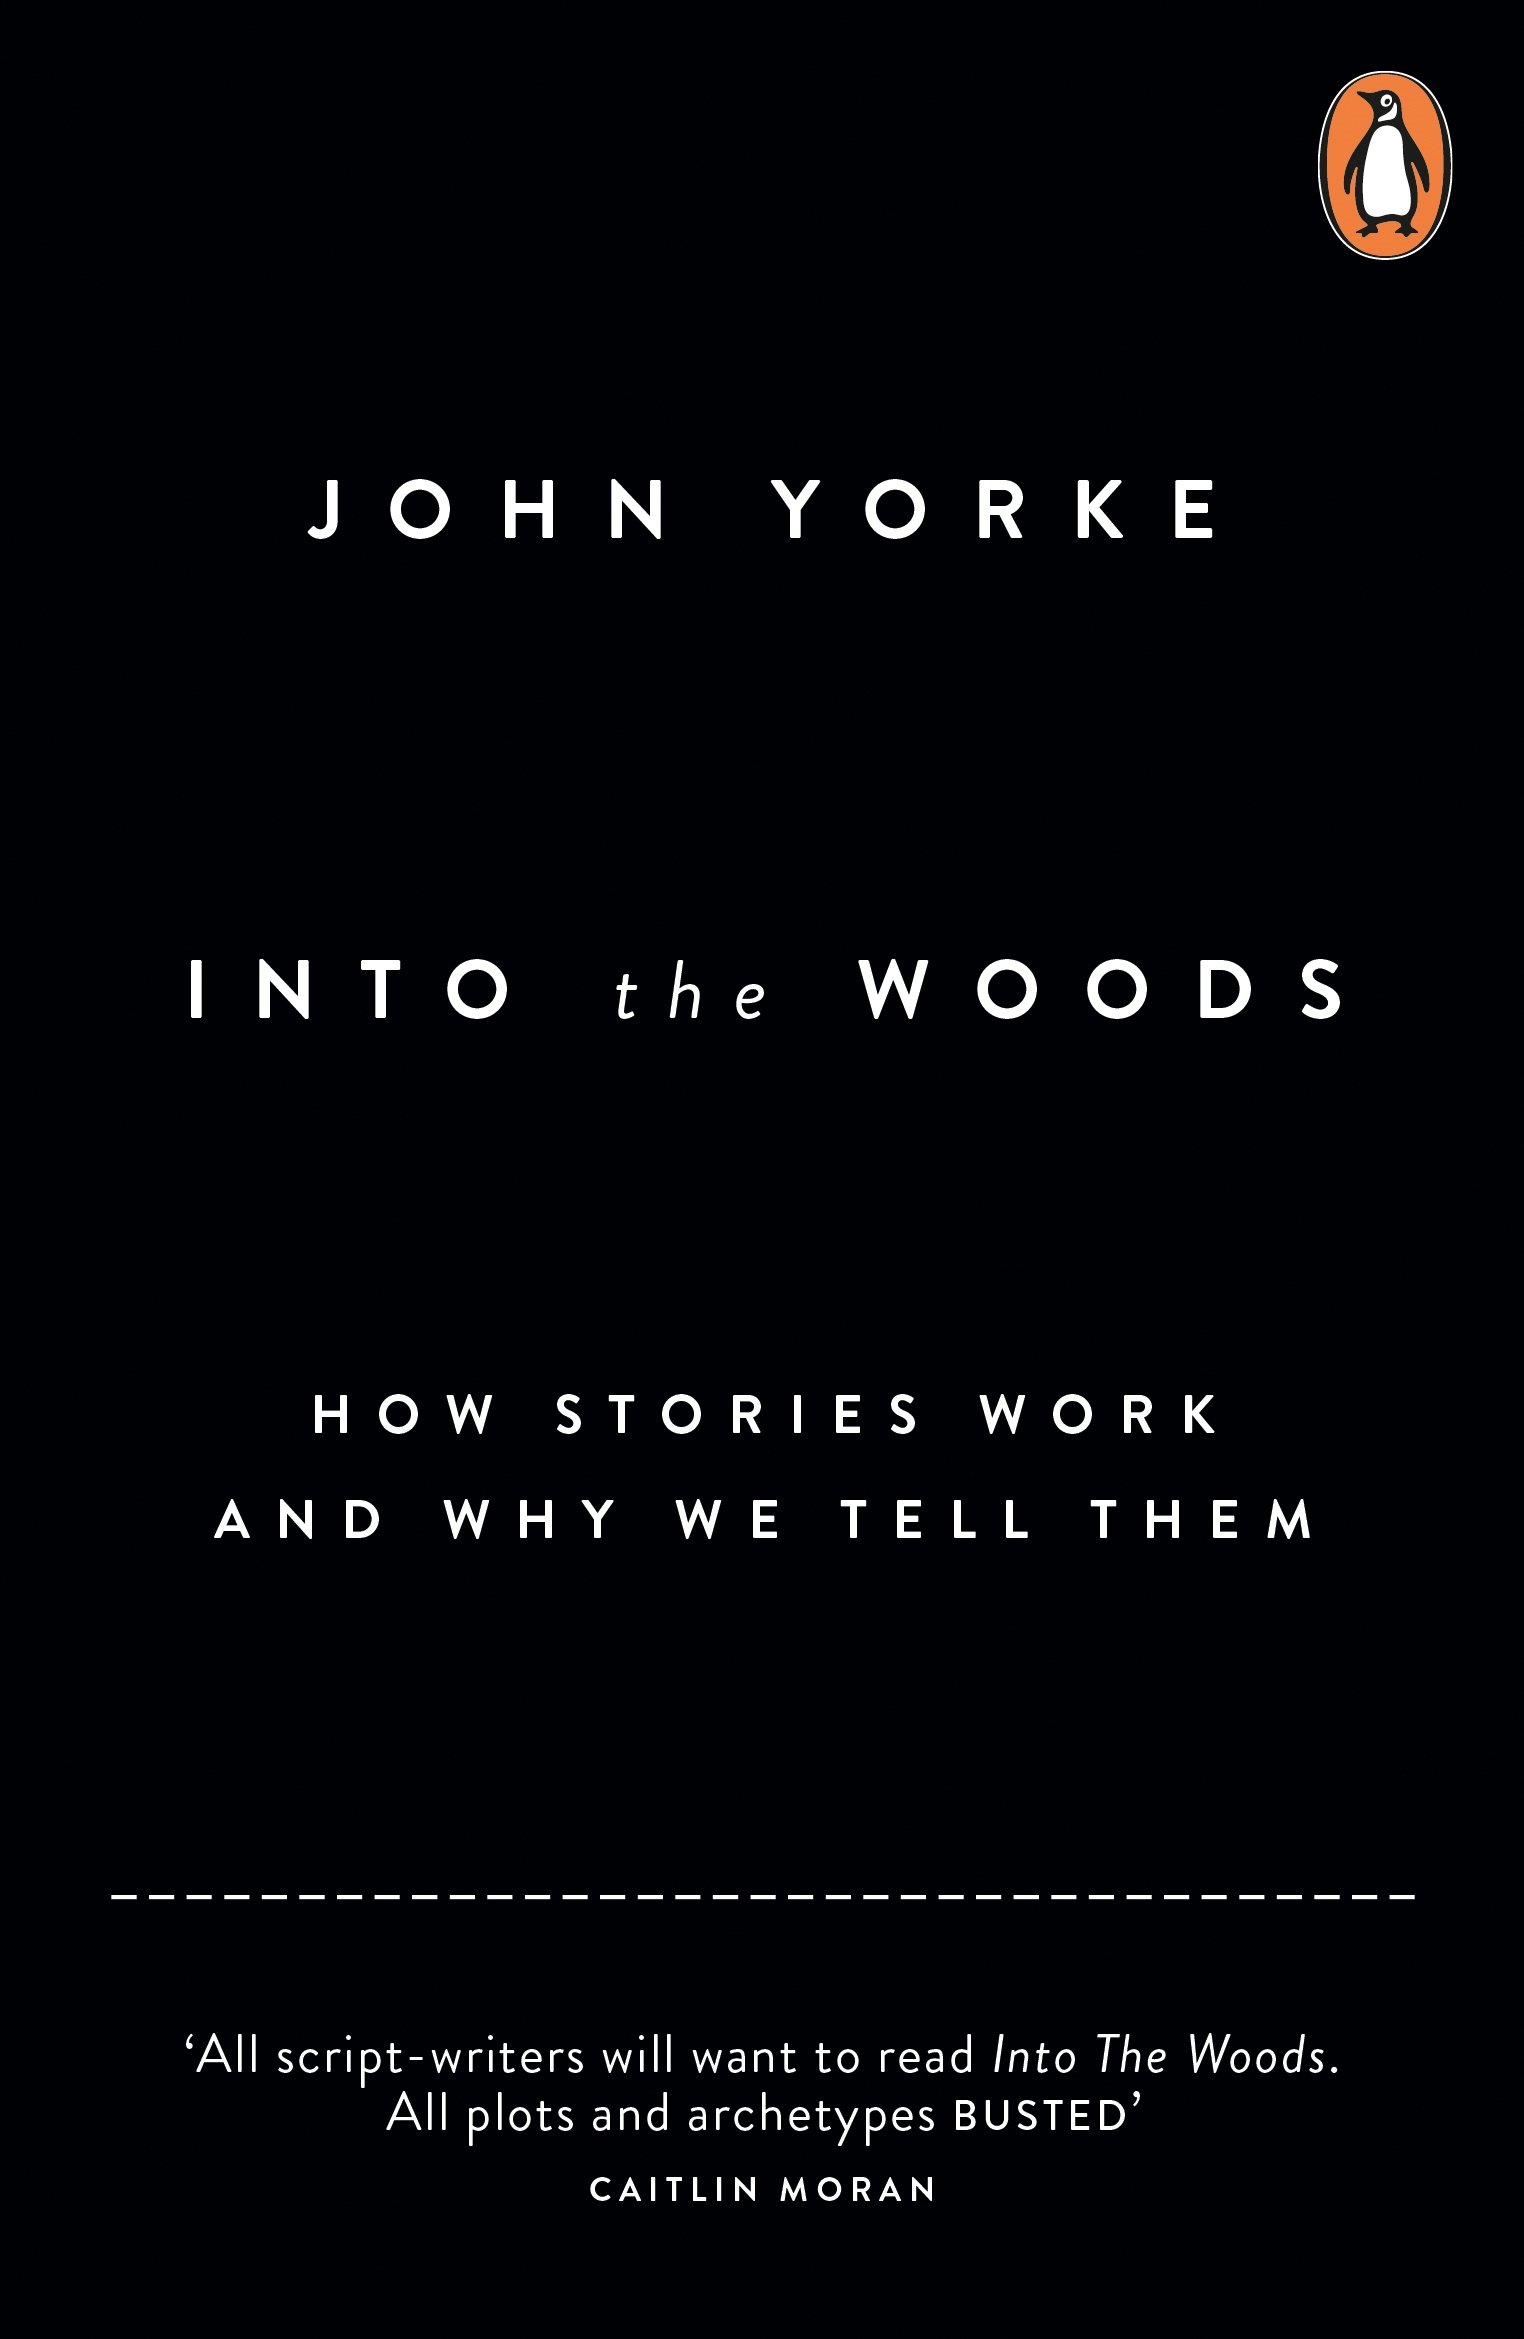 Into the Woods (2014) by John Yorke. Image courtesy of Penguin Random House.